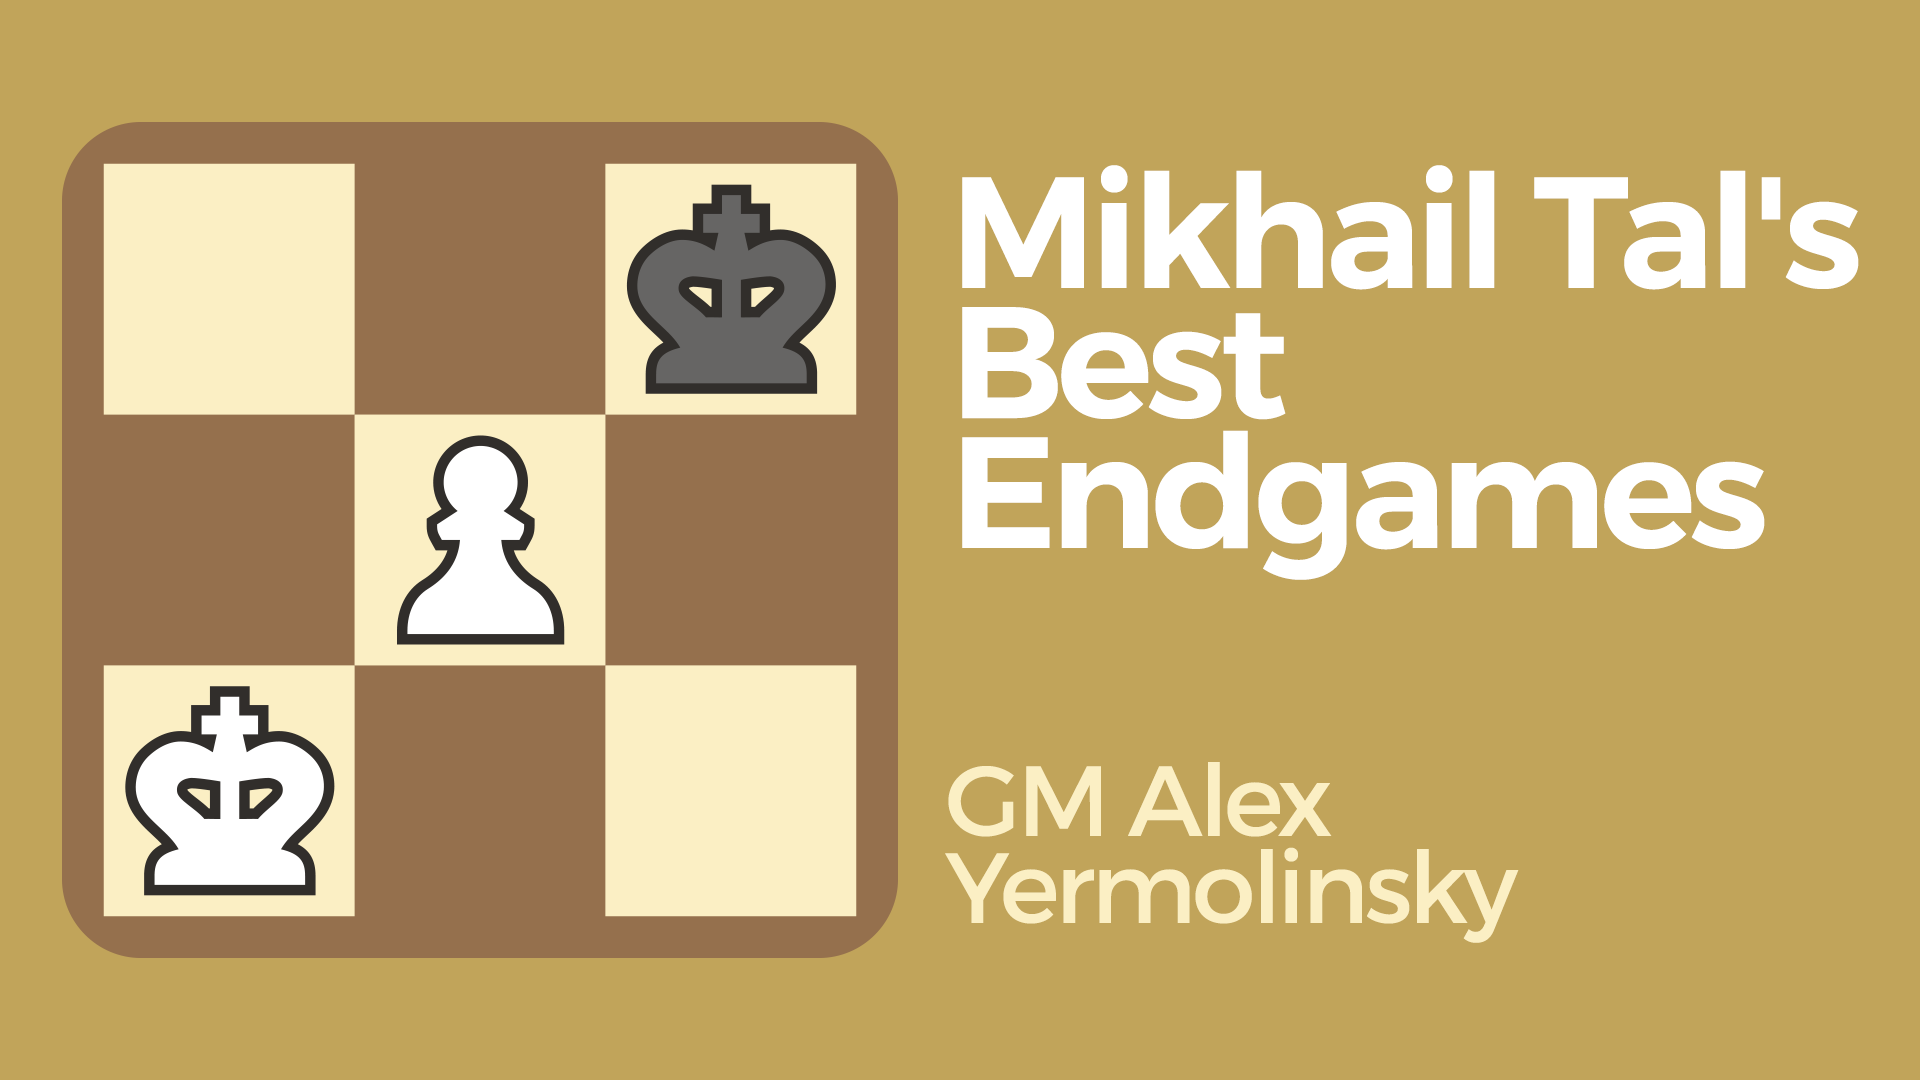 Mikhail .Tal's.winning - Chess.combinations